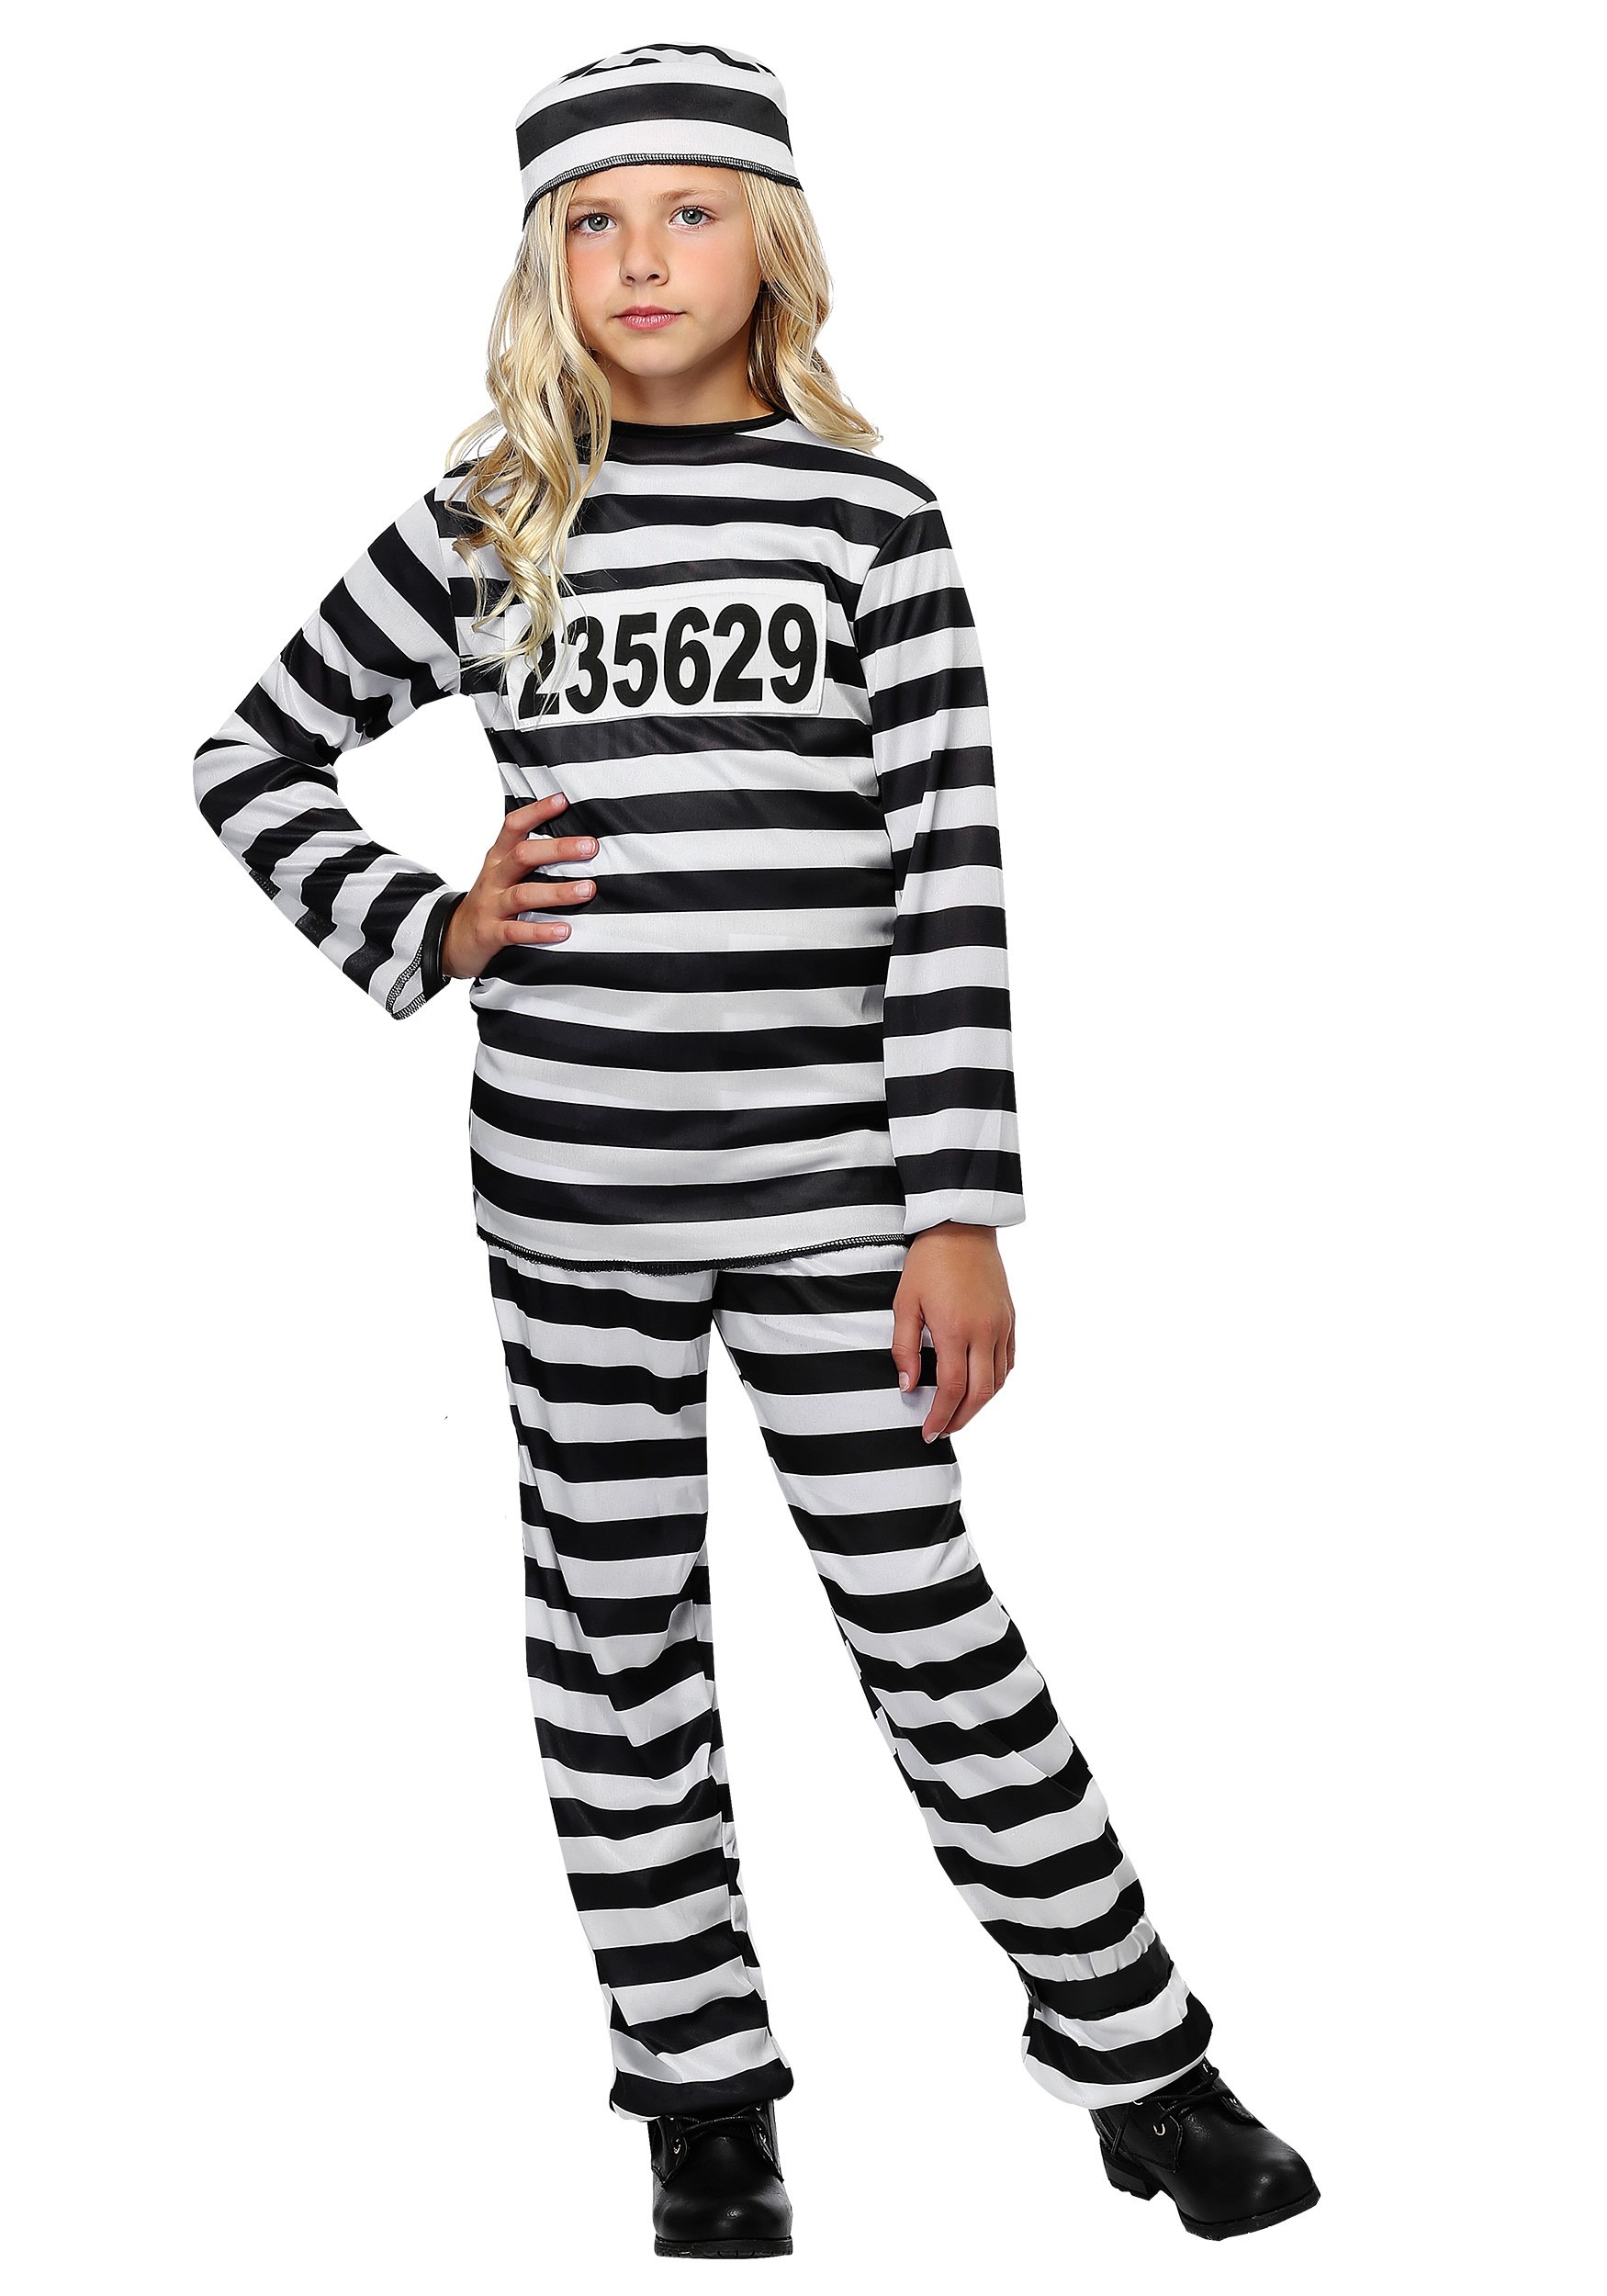 Photos - Fancy Dress FUN Costumes Prisoner Girl's Costume Black/White FUN2105CH